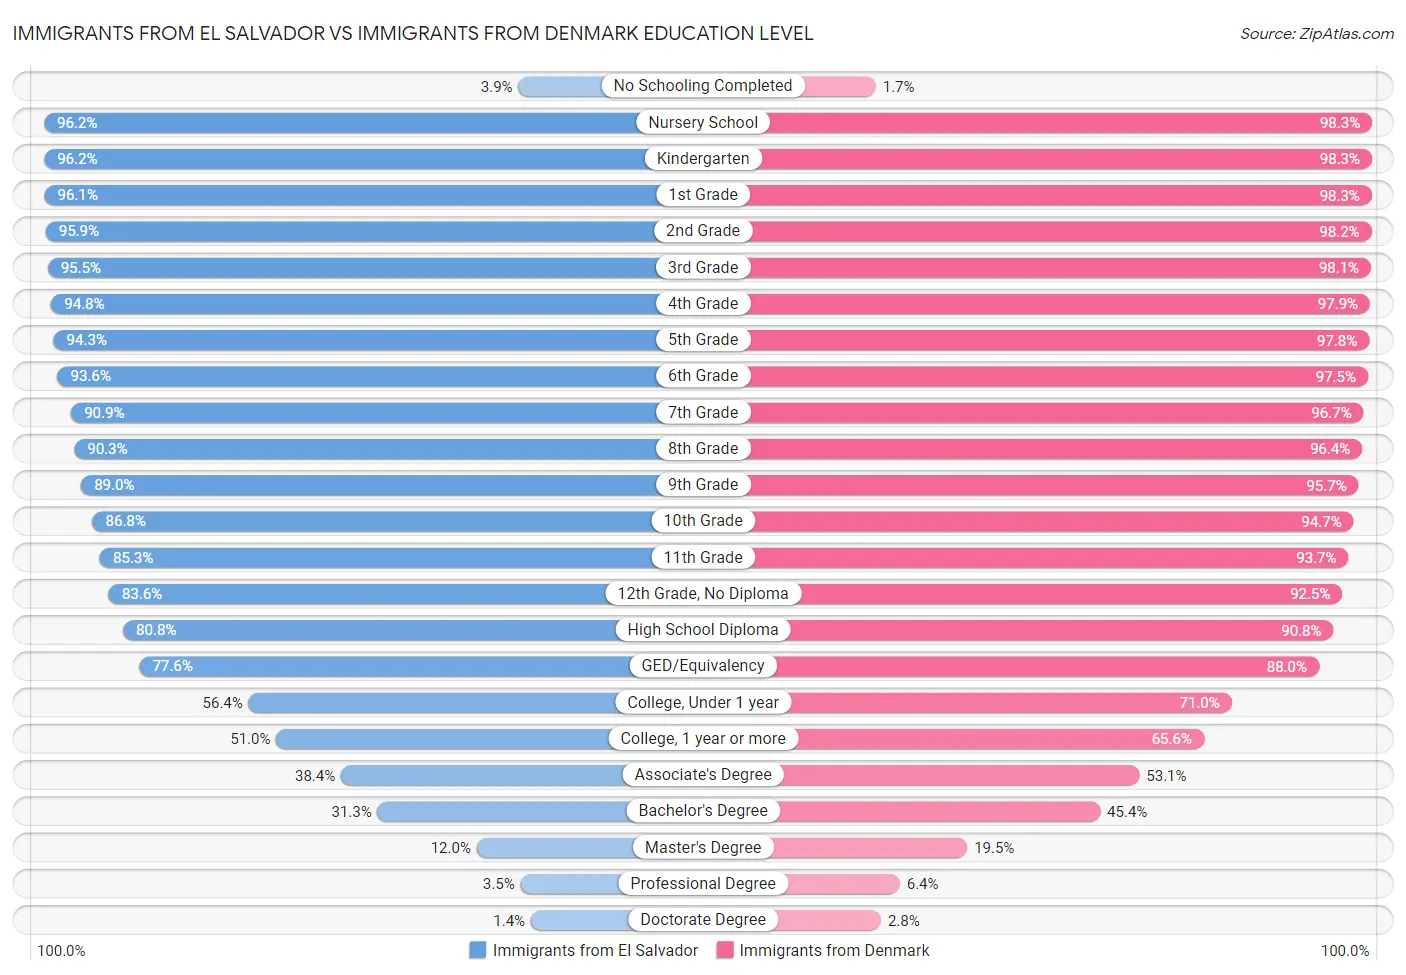 Immigrants from El Salvador vs Immigrants from Denmark Education Level